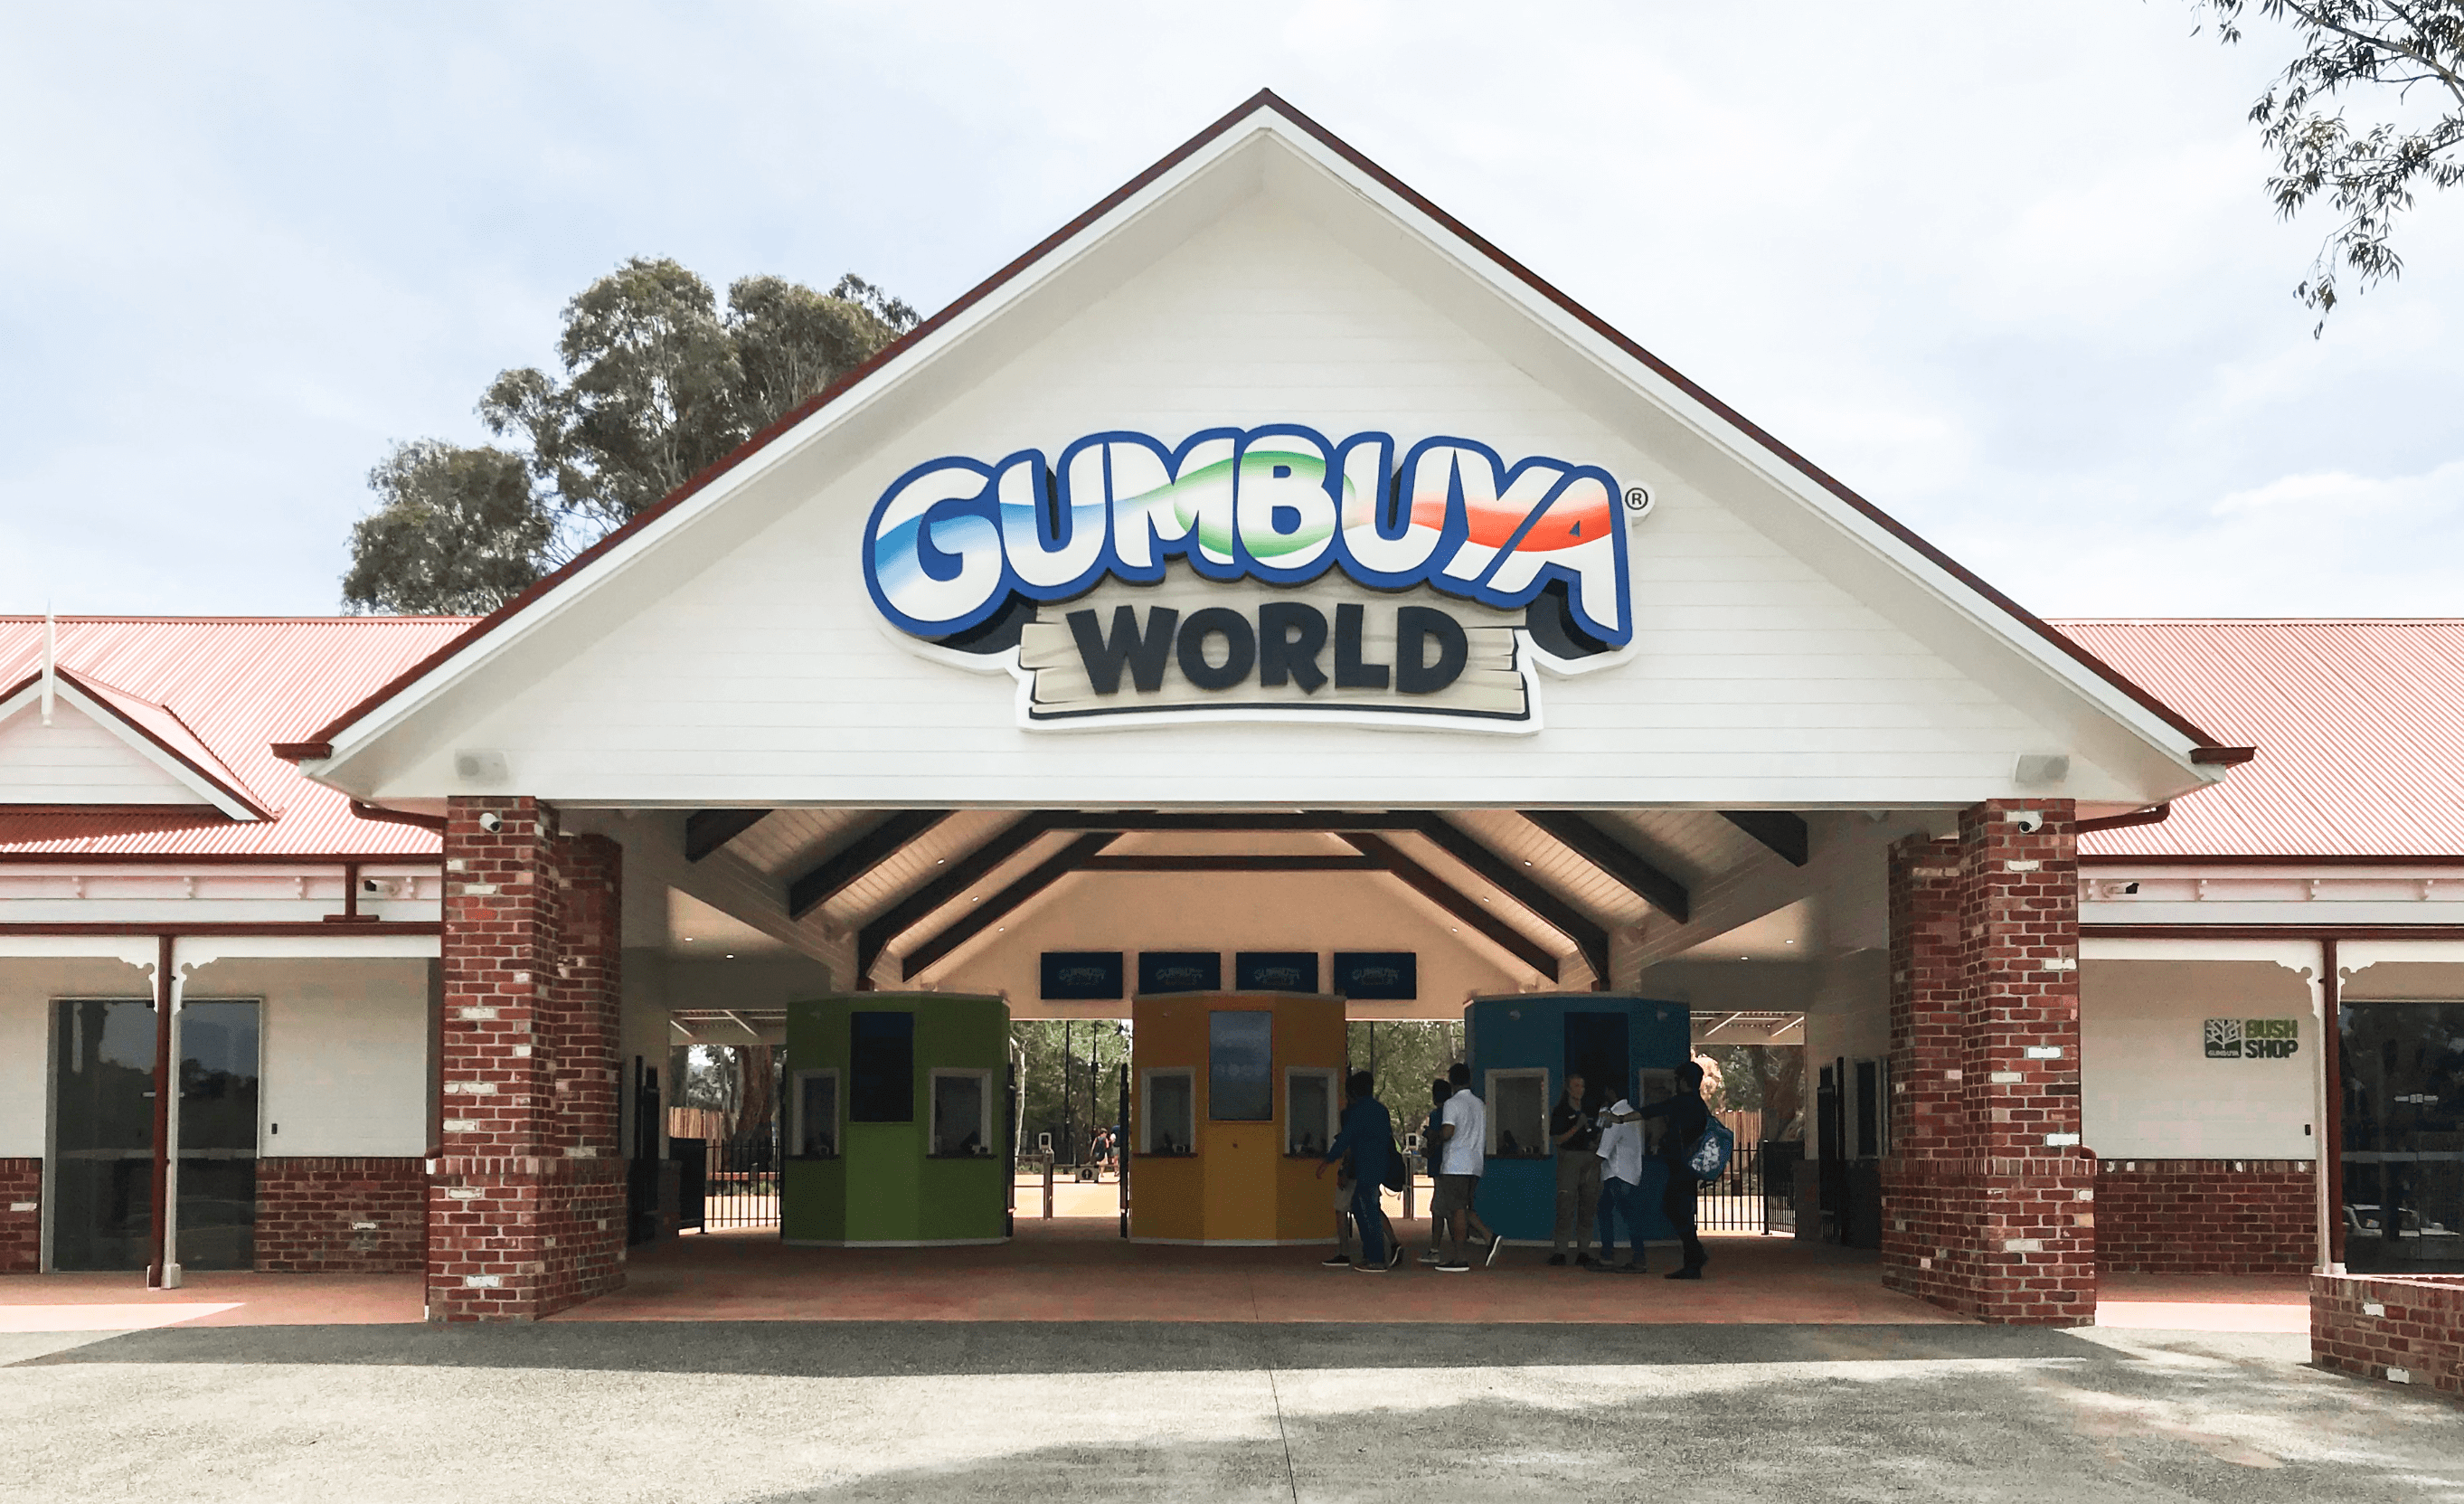 Gumbuya World - Three Scoops